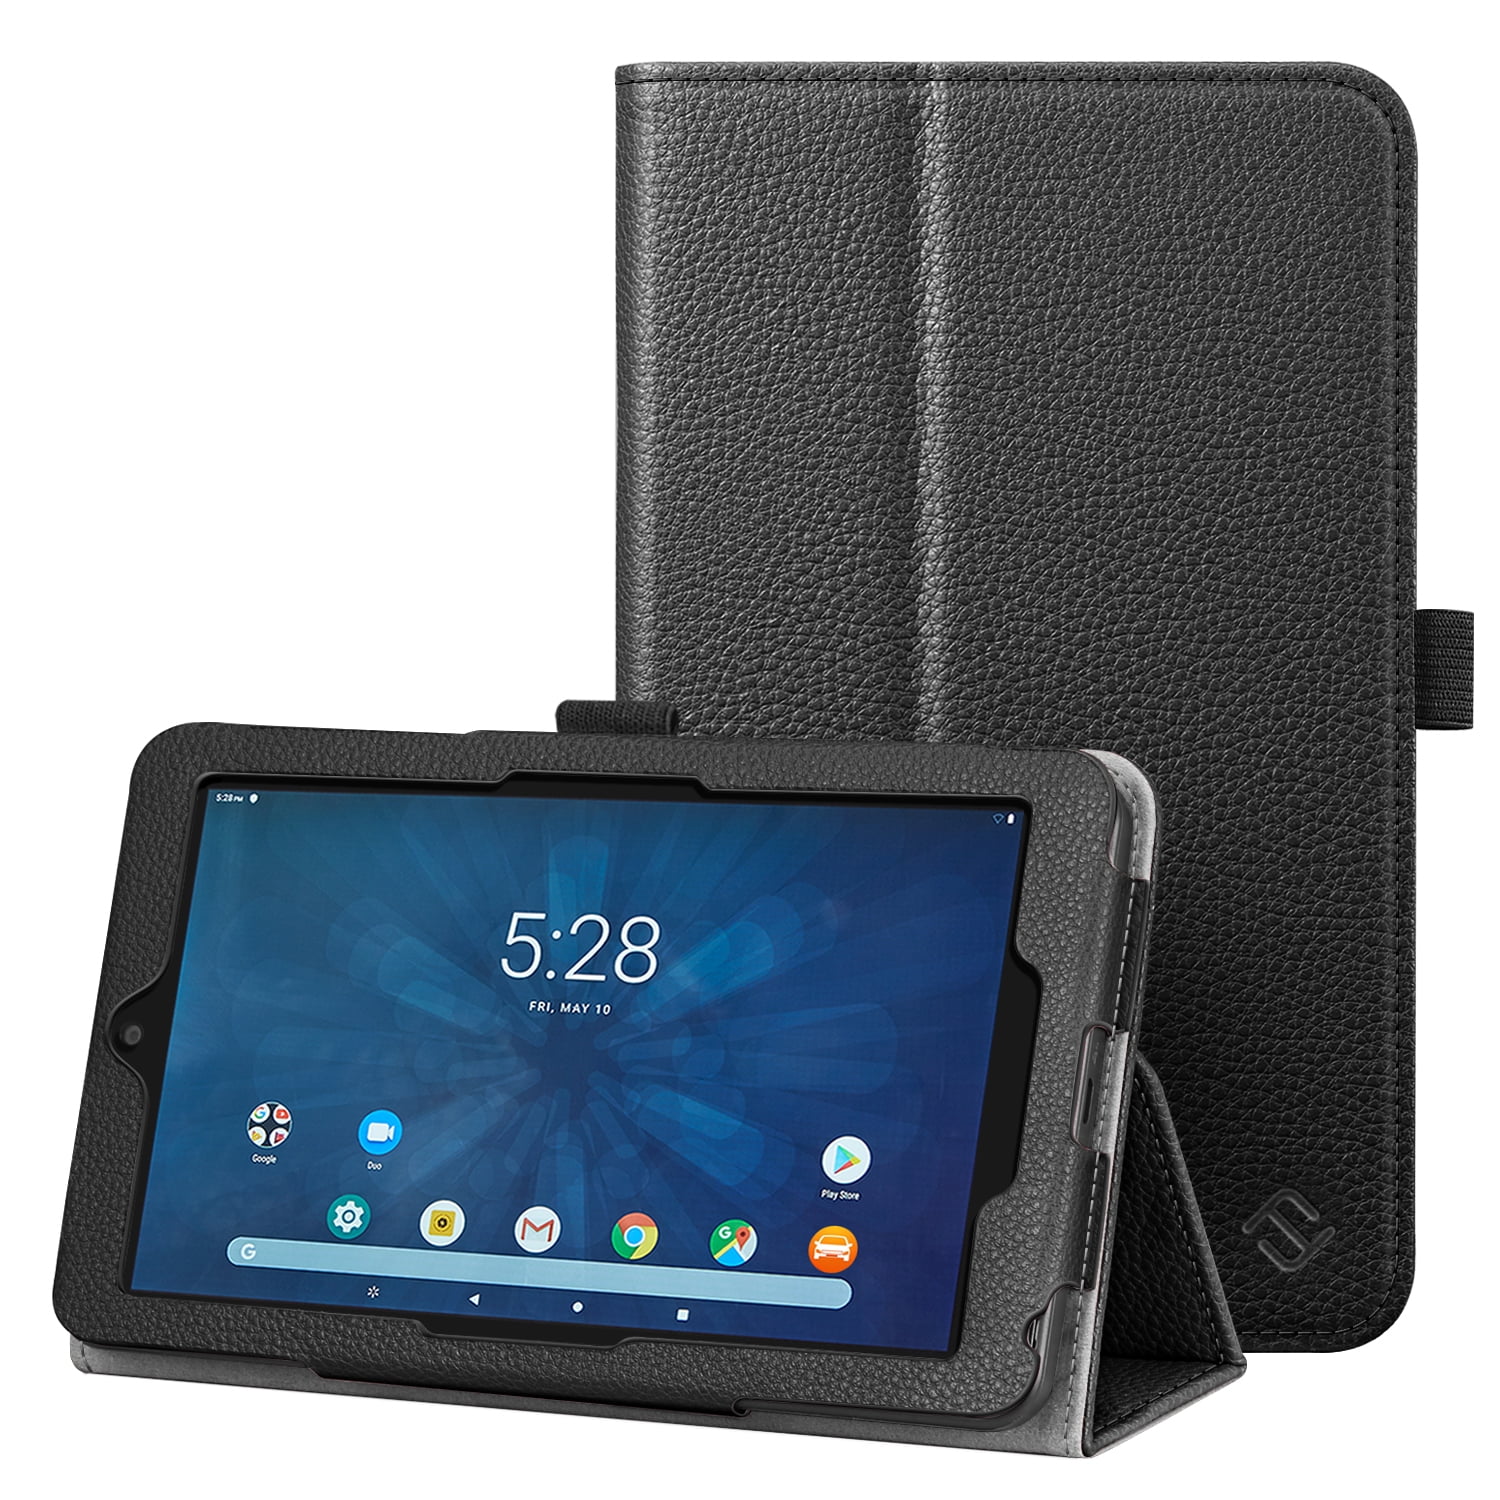 Kamer natuurpark Dapperheid Tablet Case for Onn 7" 7 Inch Android Tablet - Fintie Protective Folio  Cover With Stylus Holder, Black - Walmart.com